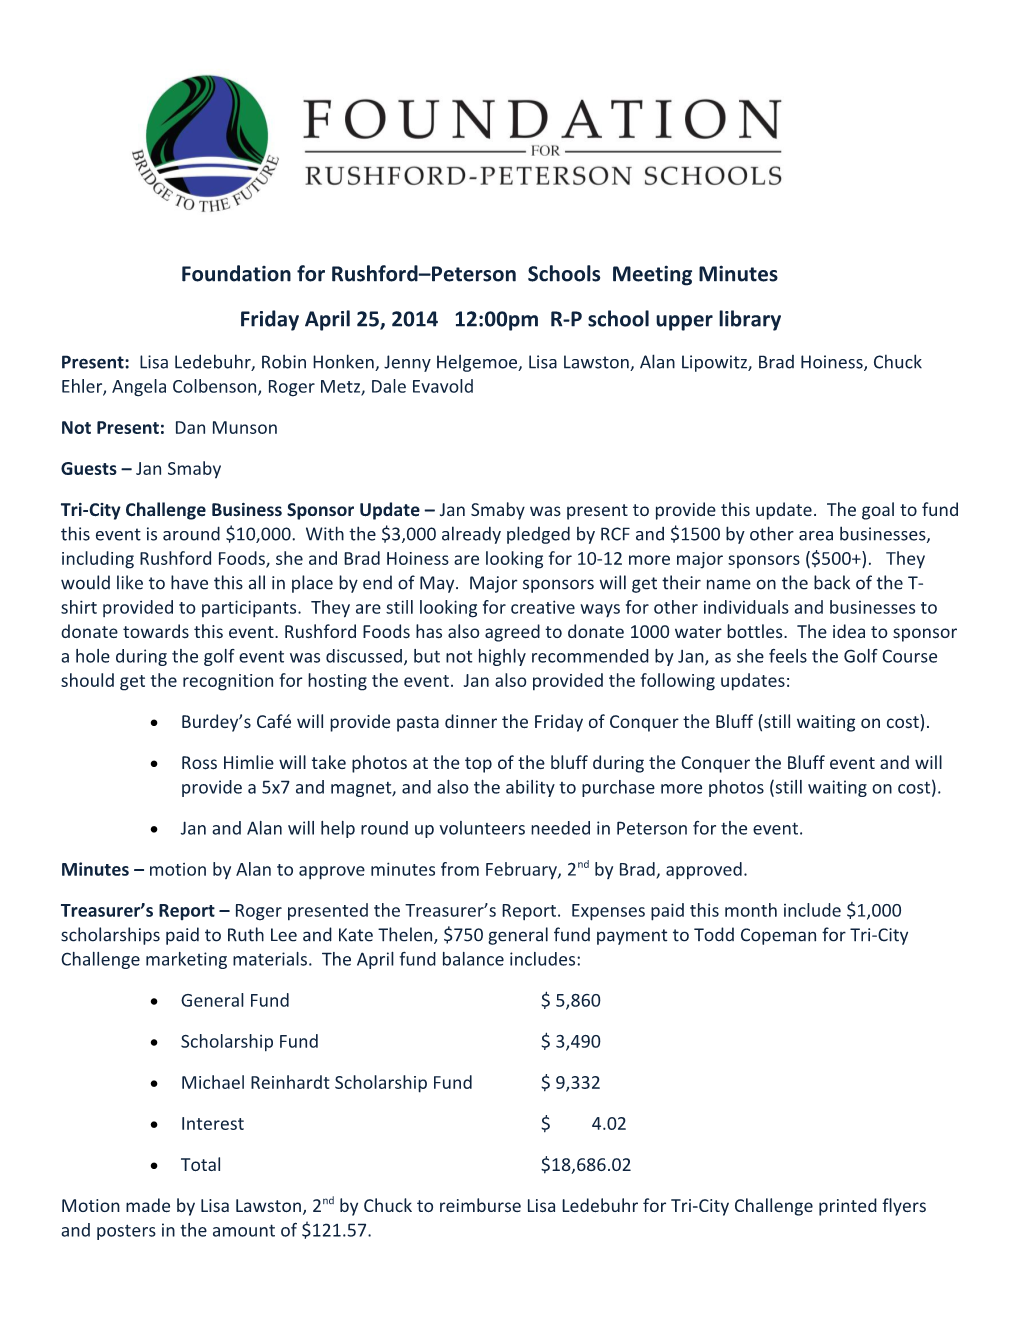 Rushford Peterson School Foundation Meeting Agenda